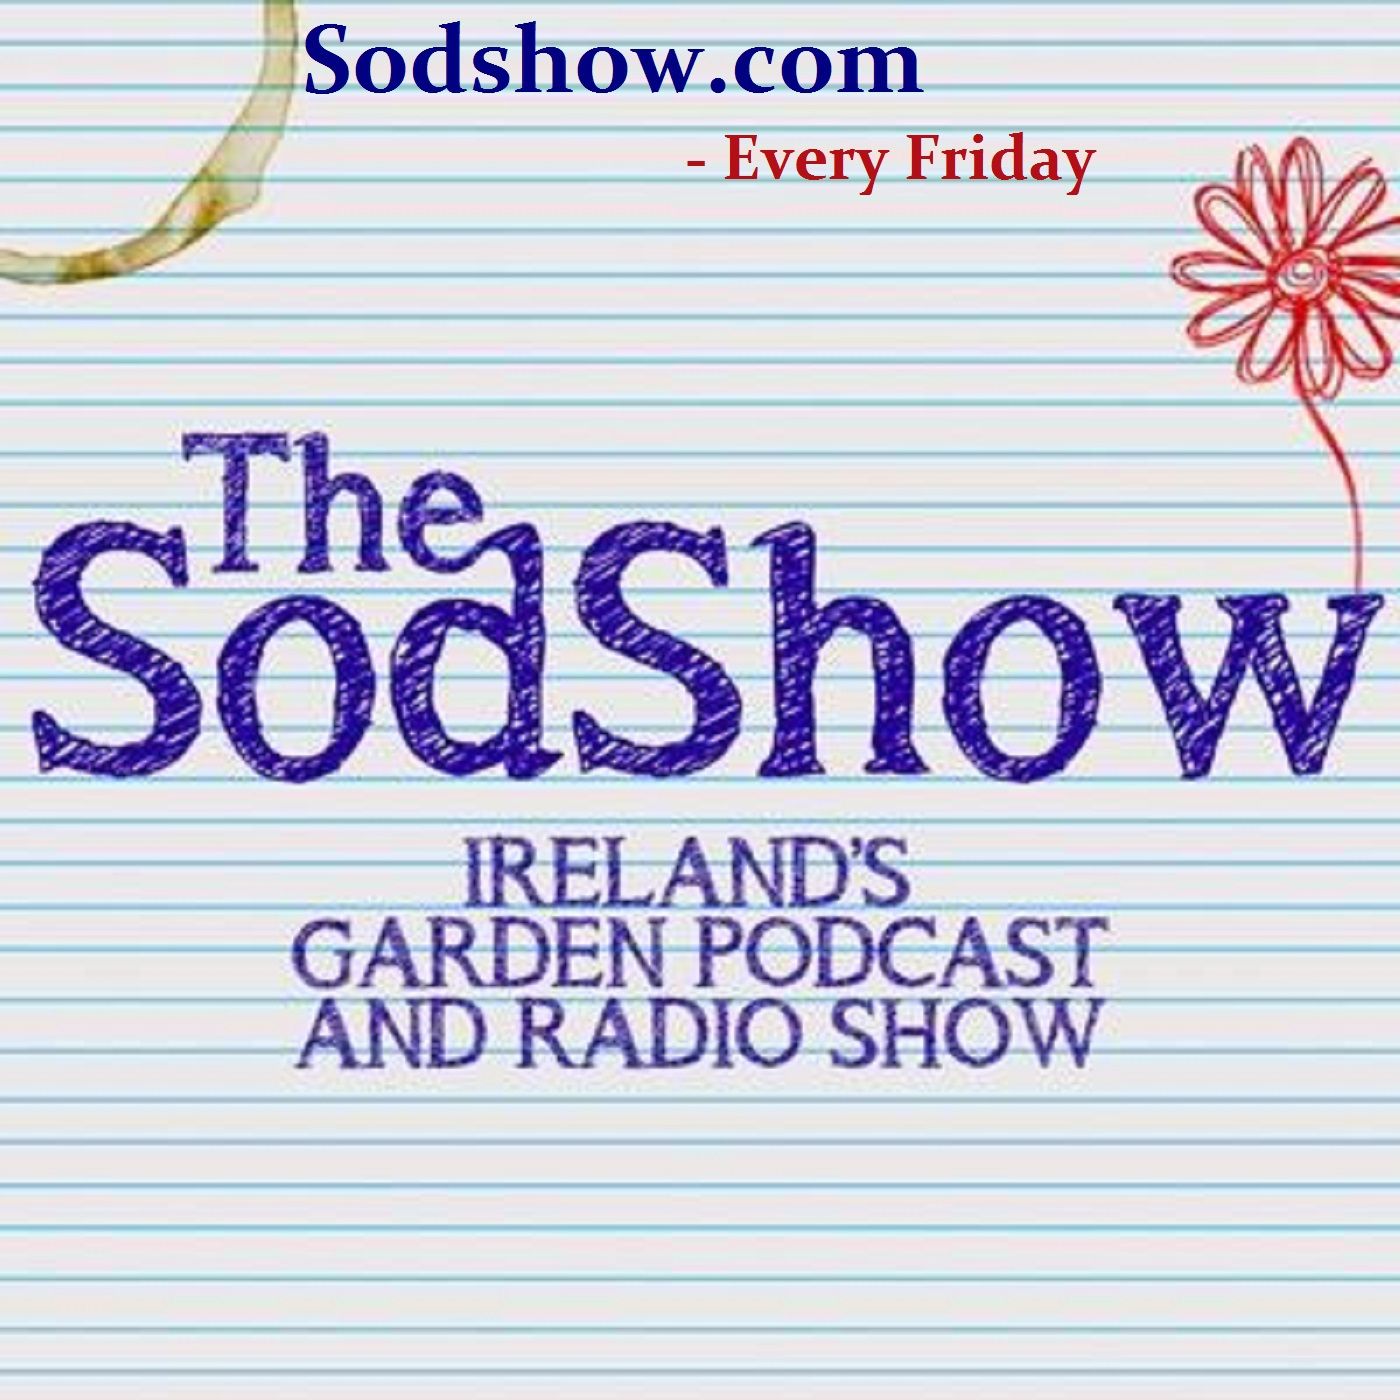 248: The Sodshow. Andrew Mangan interviews Peter Donegan, Donegan Landscaping, Dublin